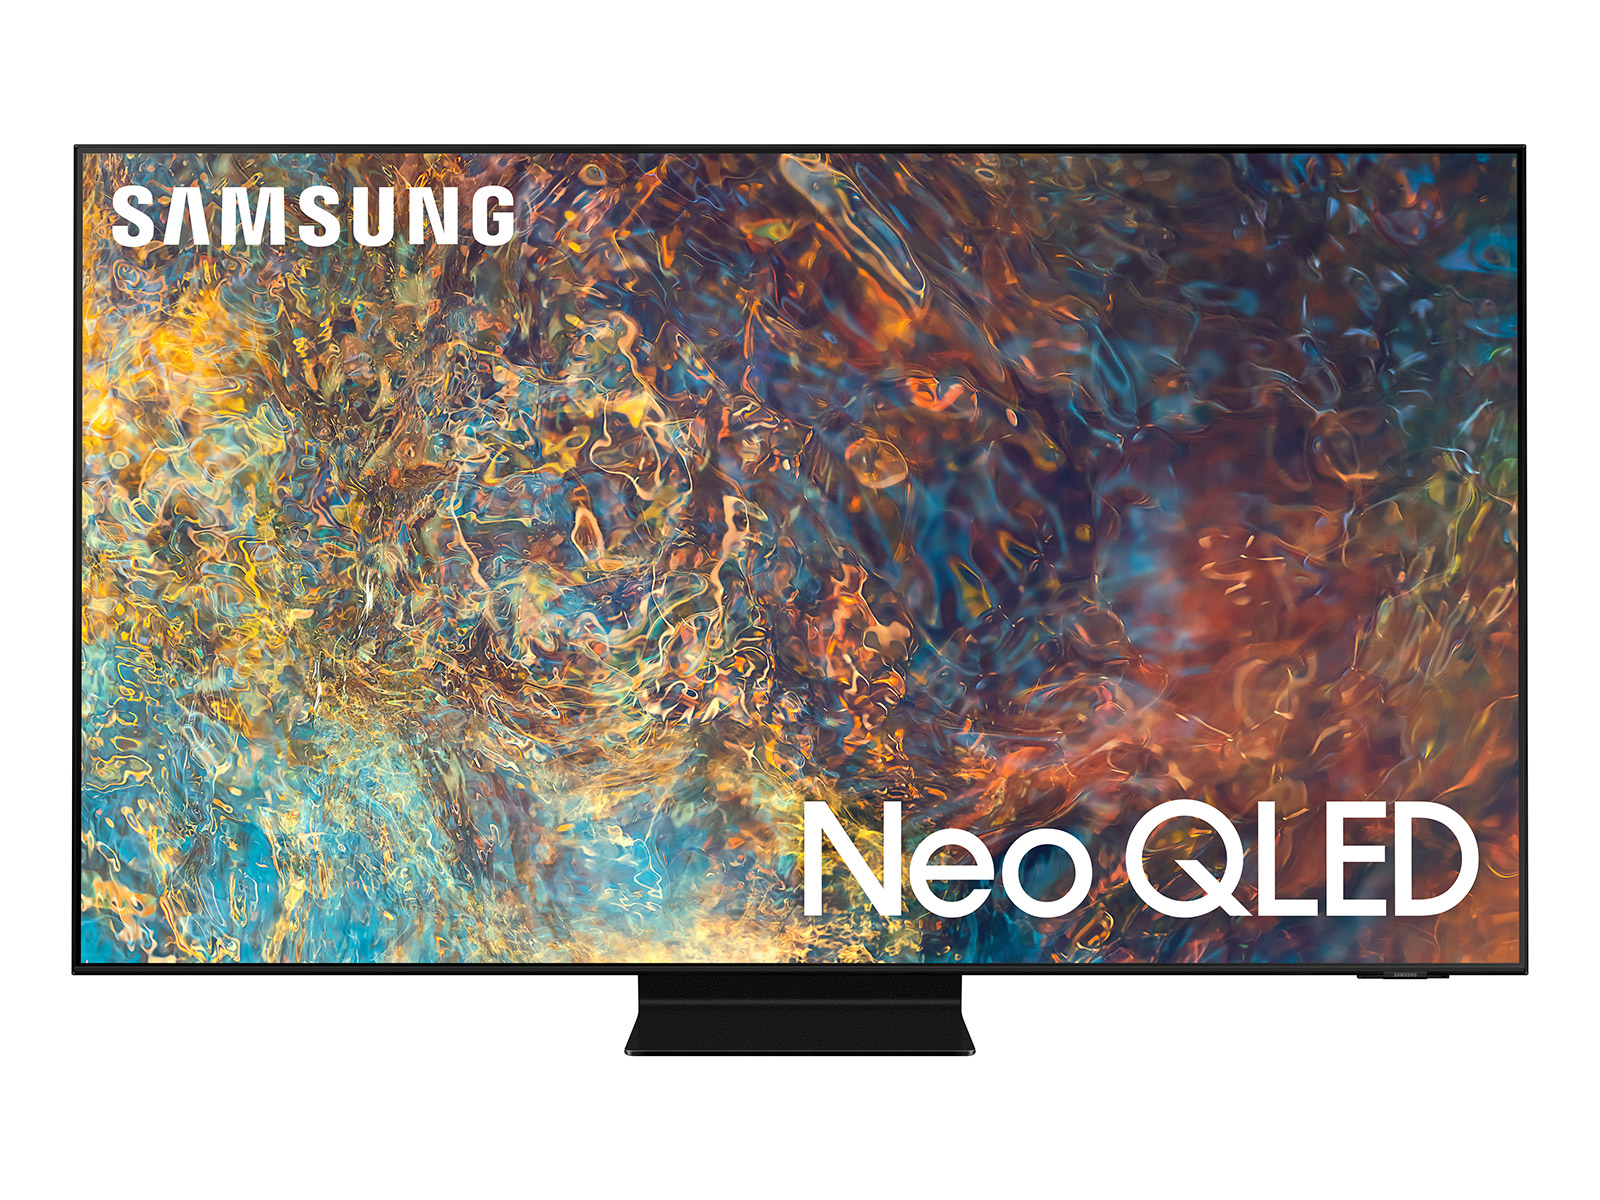 Samsung EDU/Government/EPP Discount: QN90A Series - 85" Neo QLED 4K Smart TV - $3059.99 at Samsung